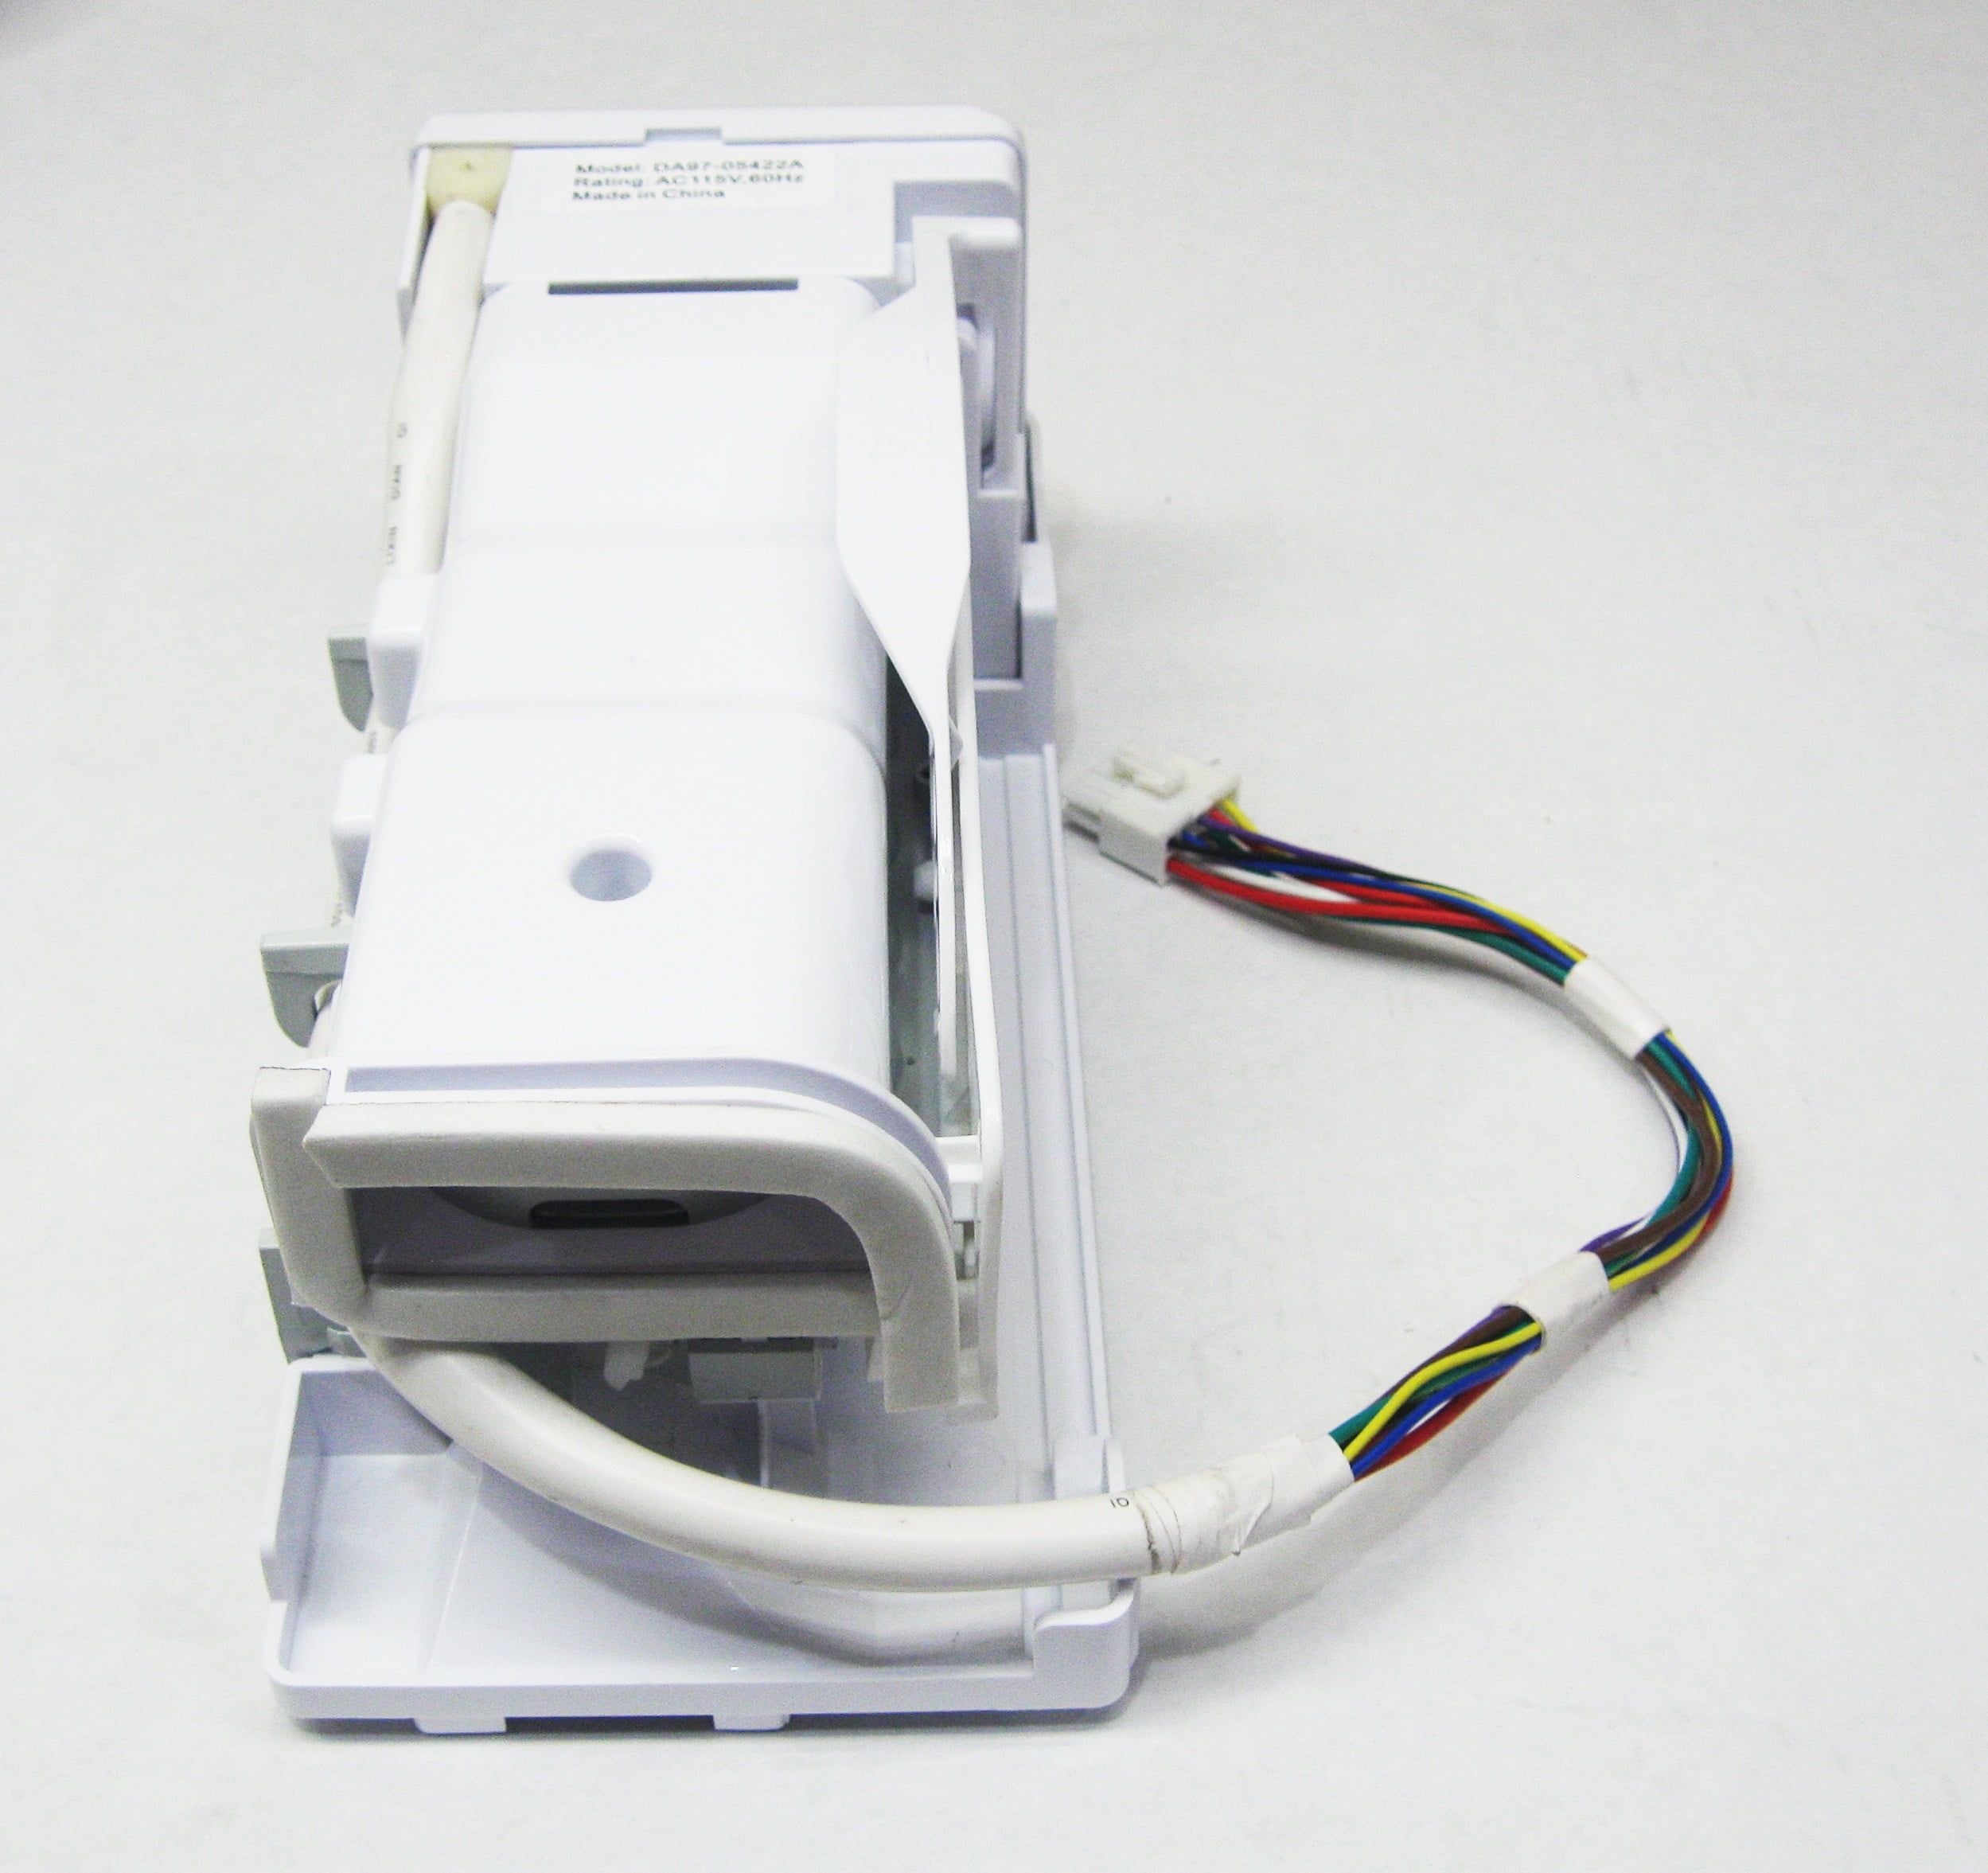 PS4173396 Supplying Demand DA97-05422A Refrigerator Ice Maker Fits AP4318629 